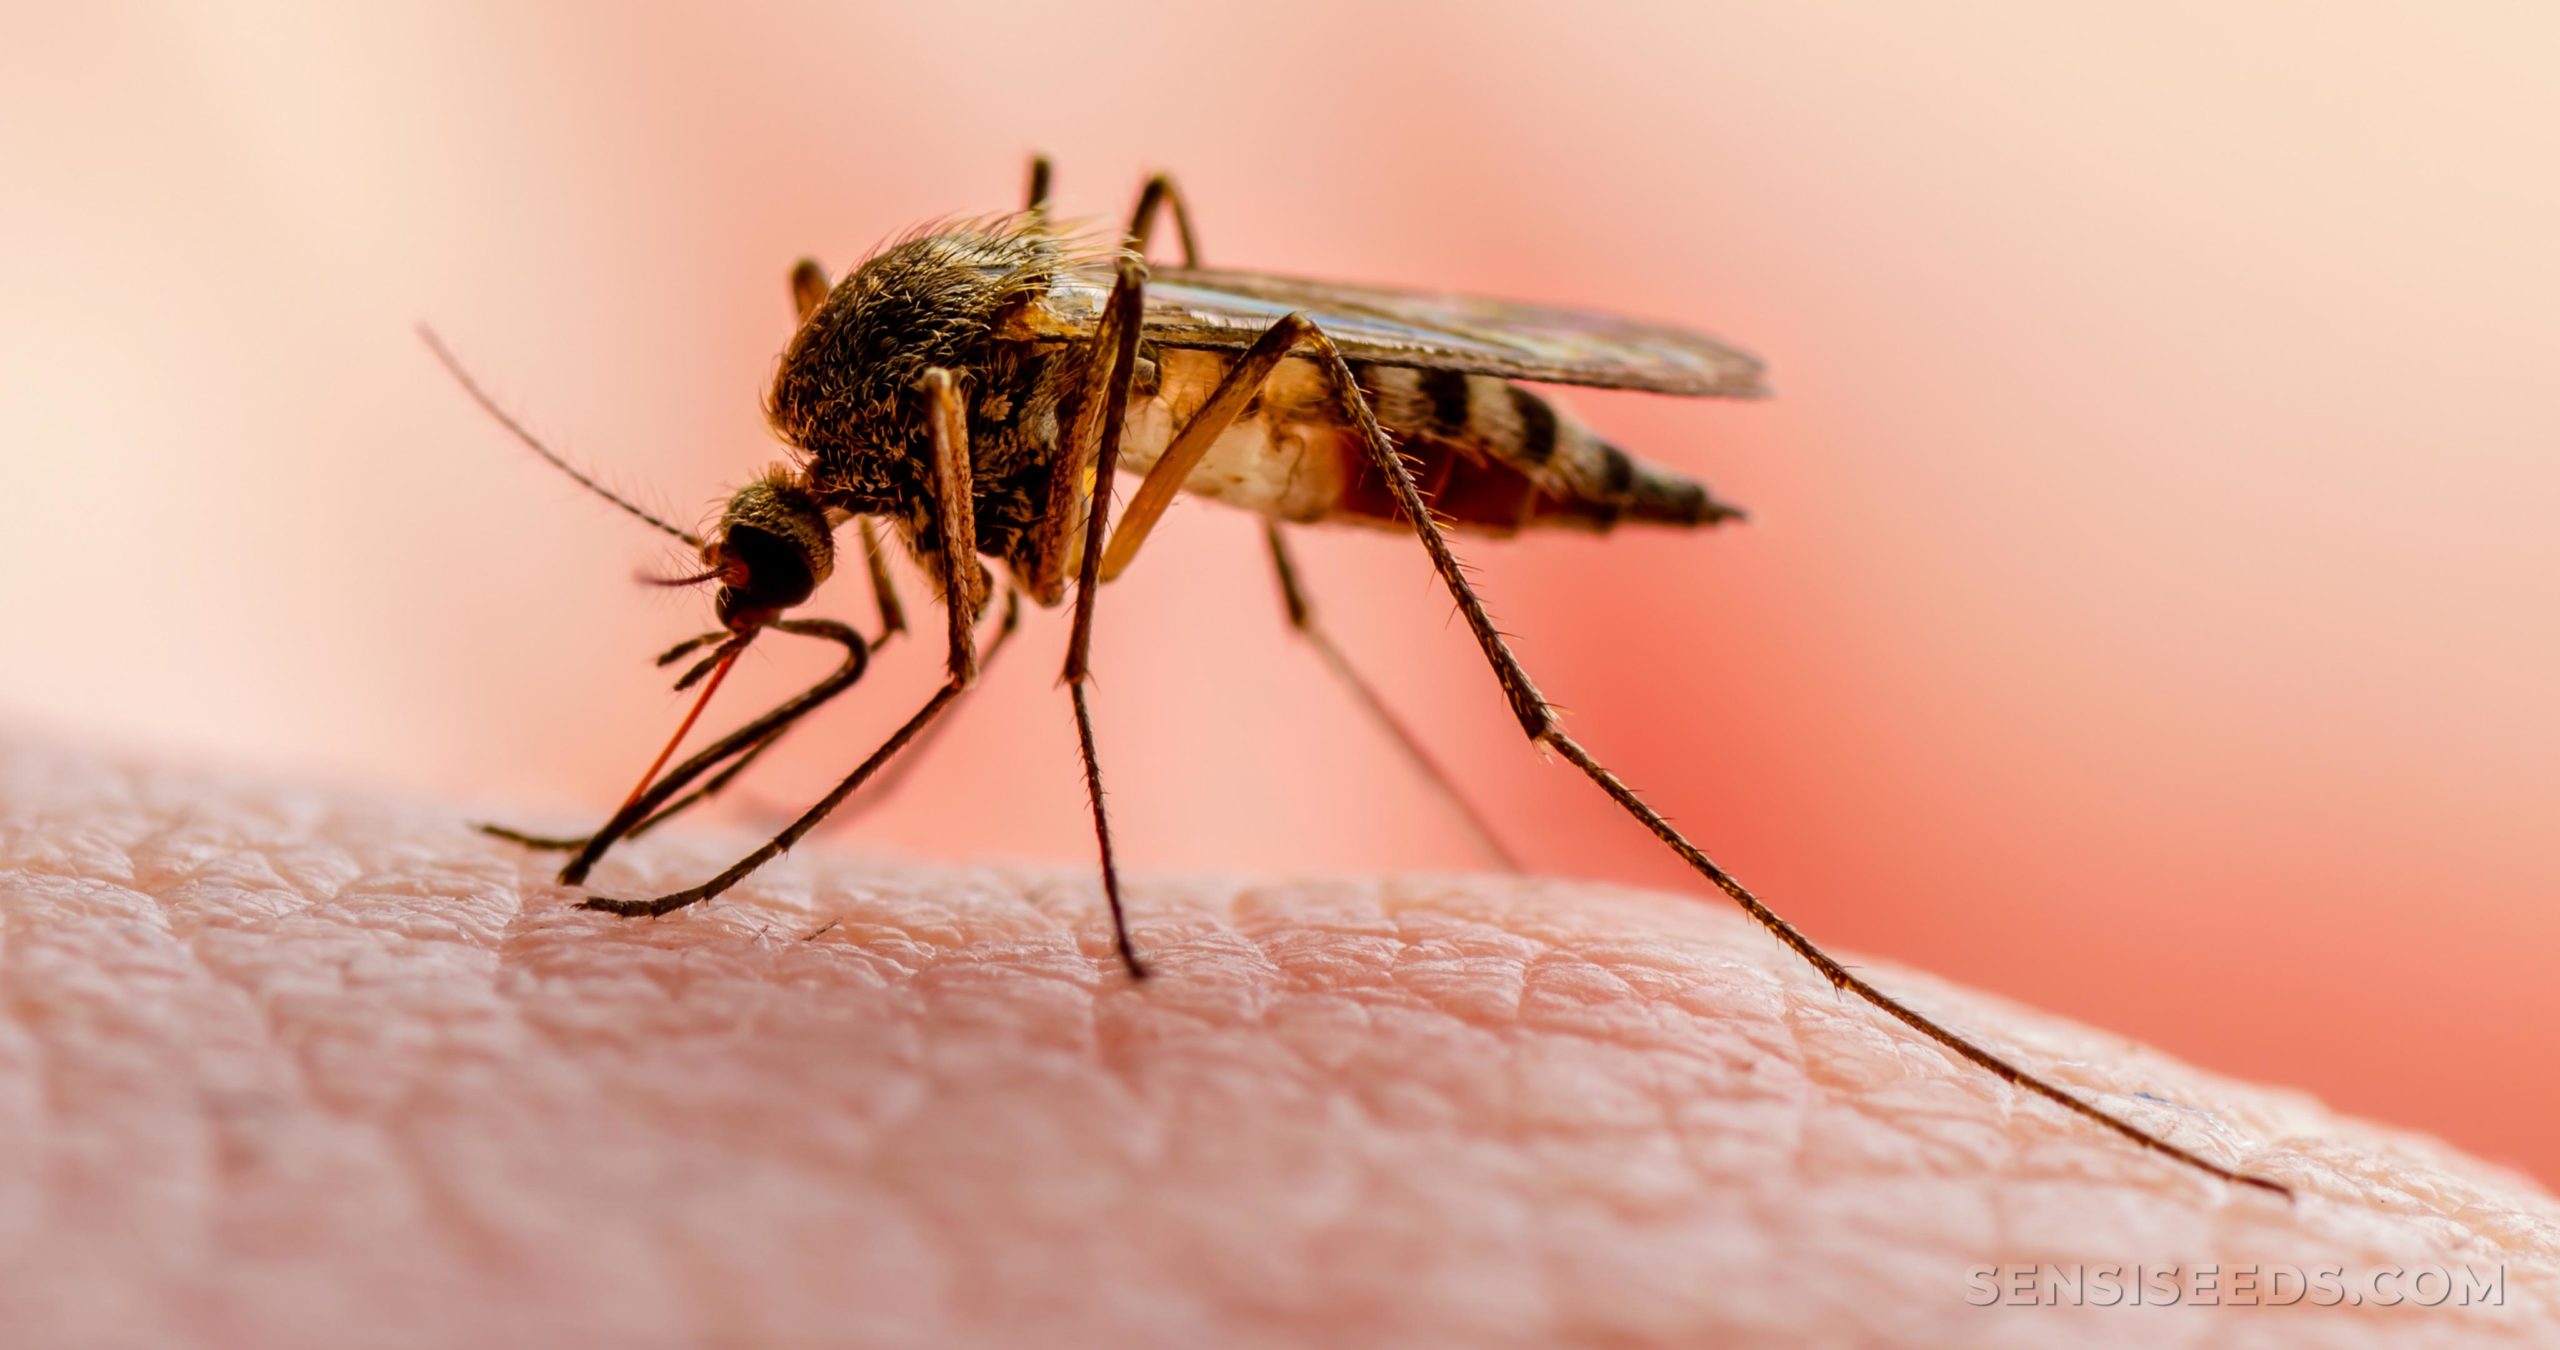 RD notifica un segundo caso de malaria importado